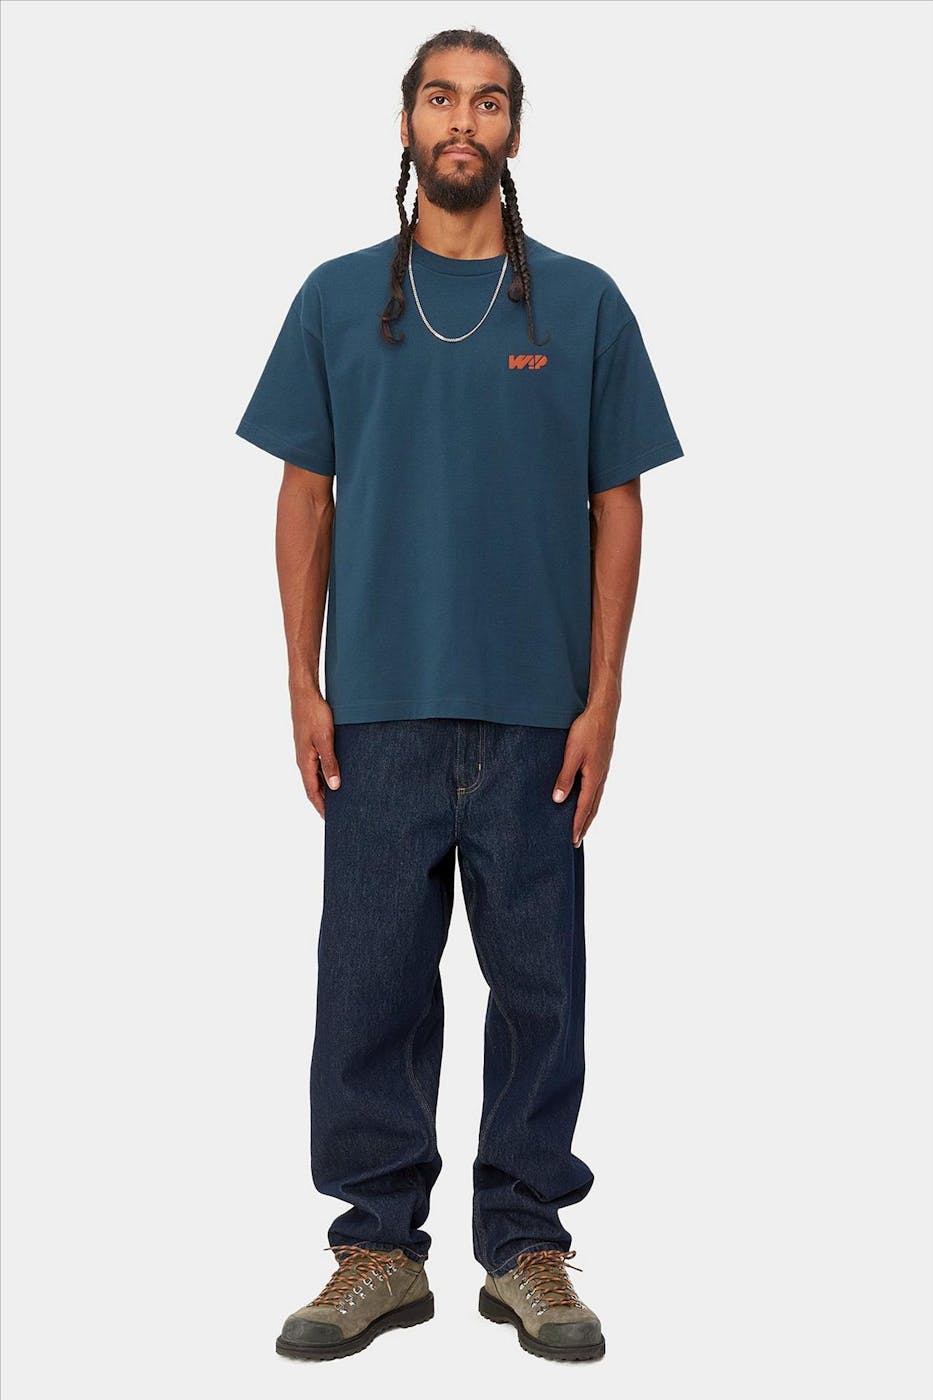 Carhartt WIP - Donkerblauw Assemble T-shirt